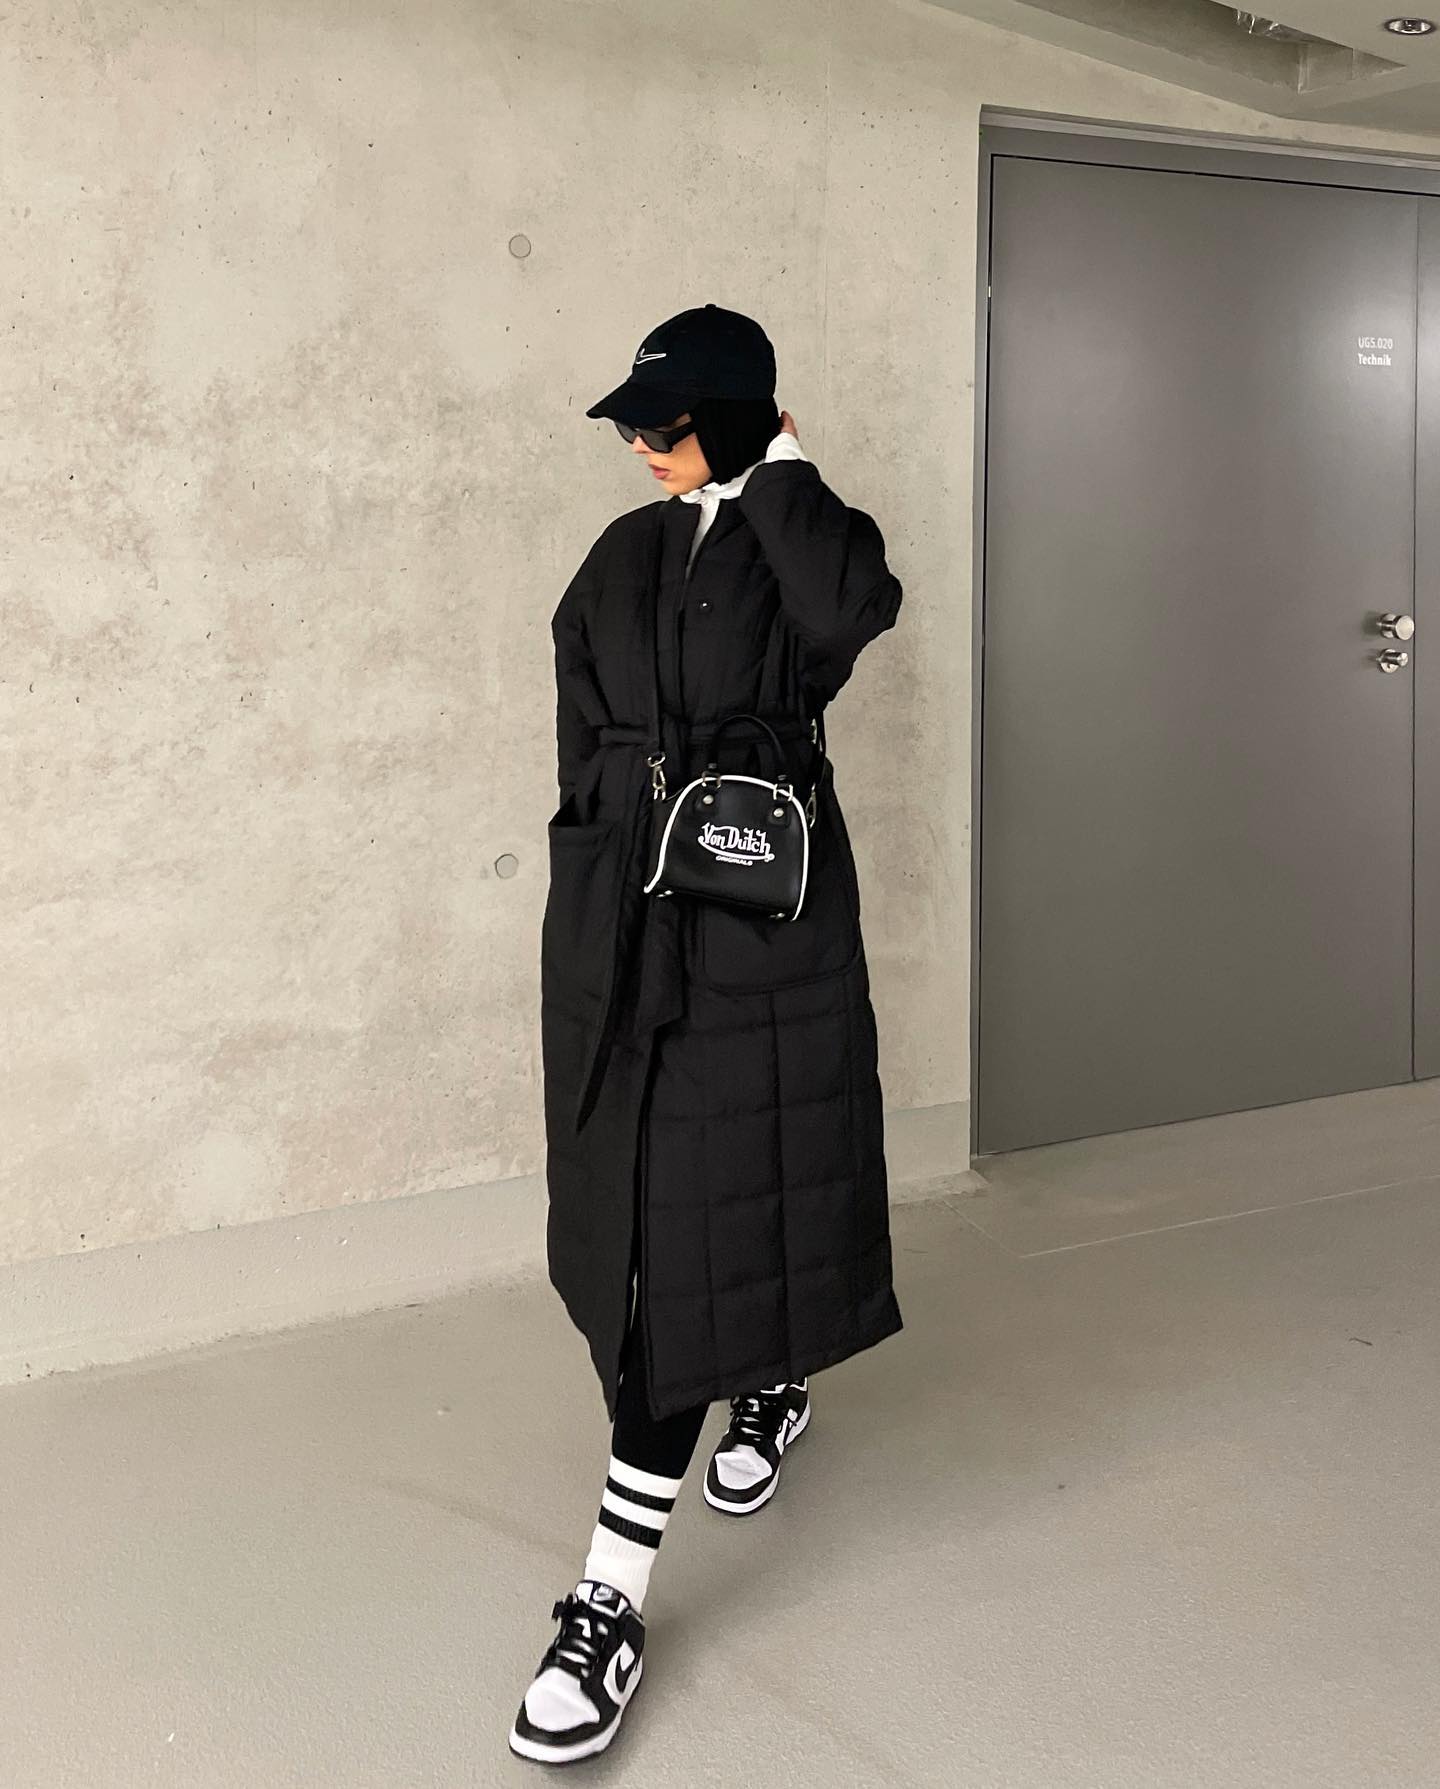 Wanita kaukasia mengenakan long coat hitam, legging hitam dan sepatu sneakers.